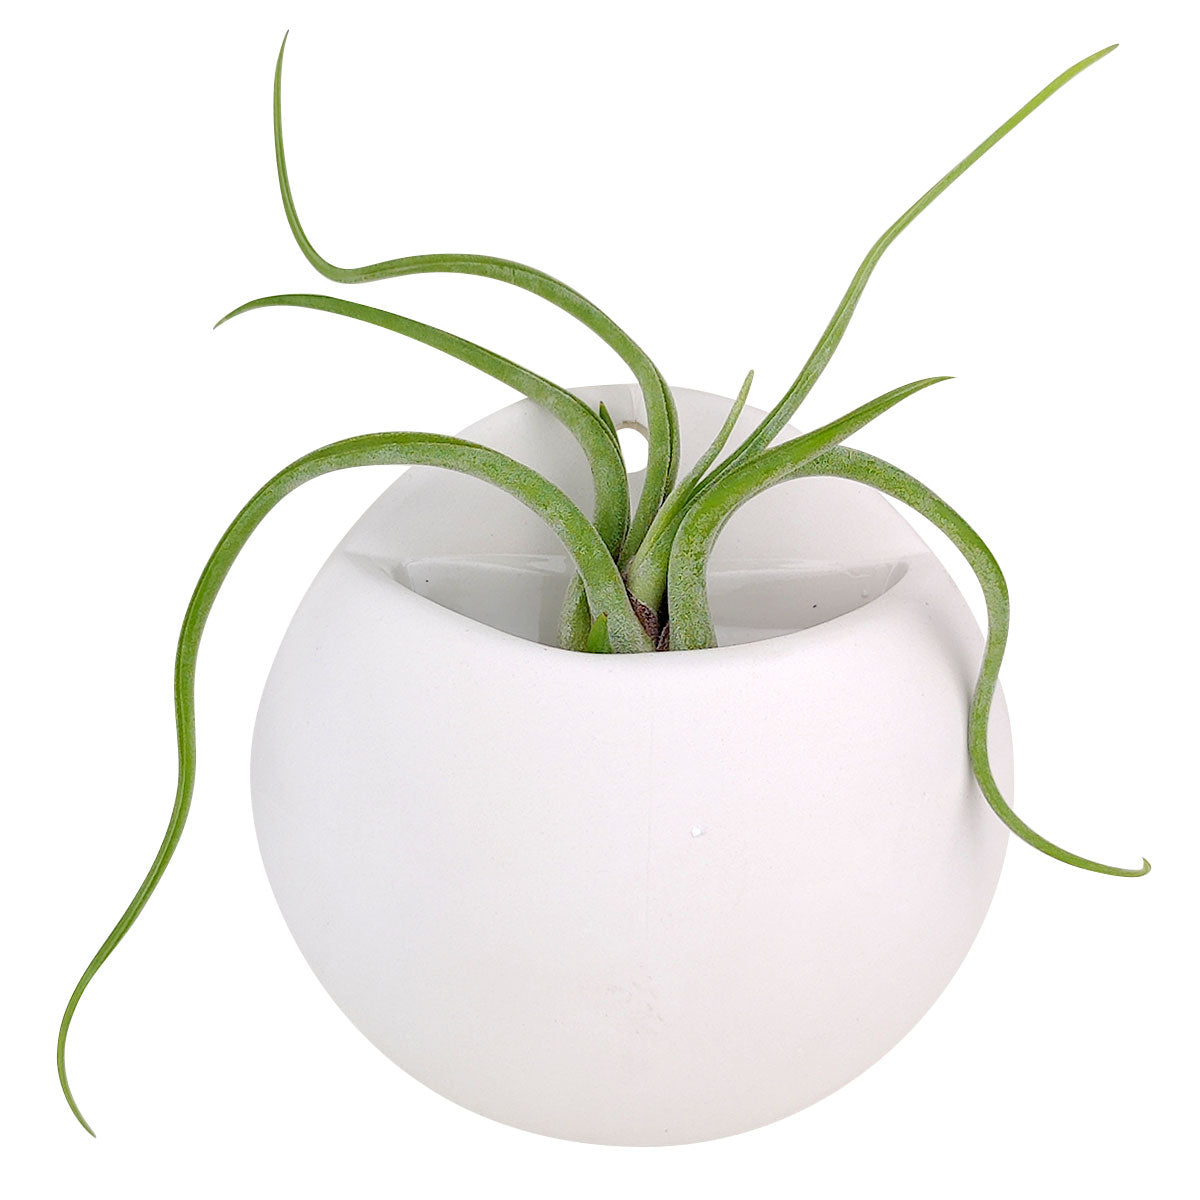 Round Hanging Planter for sale, ceramic vase for home decor, ceramic succulent and cactus pots for sale, Succulent gift ideas